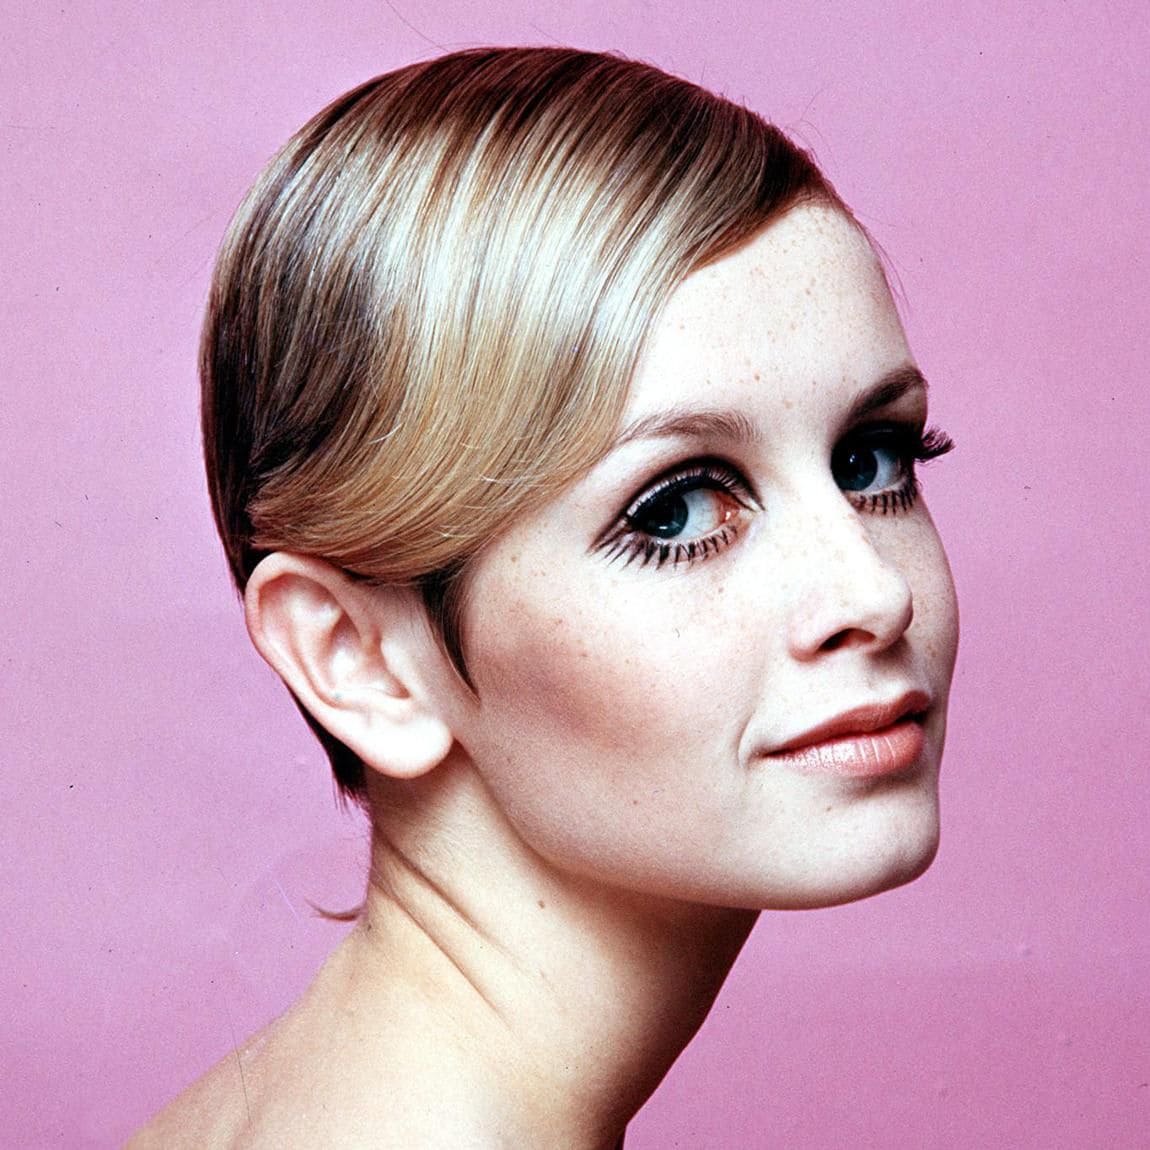 1967. Modelling. A portrait of British model Twiggy wearing black mascara.